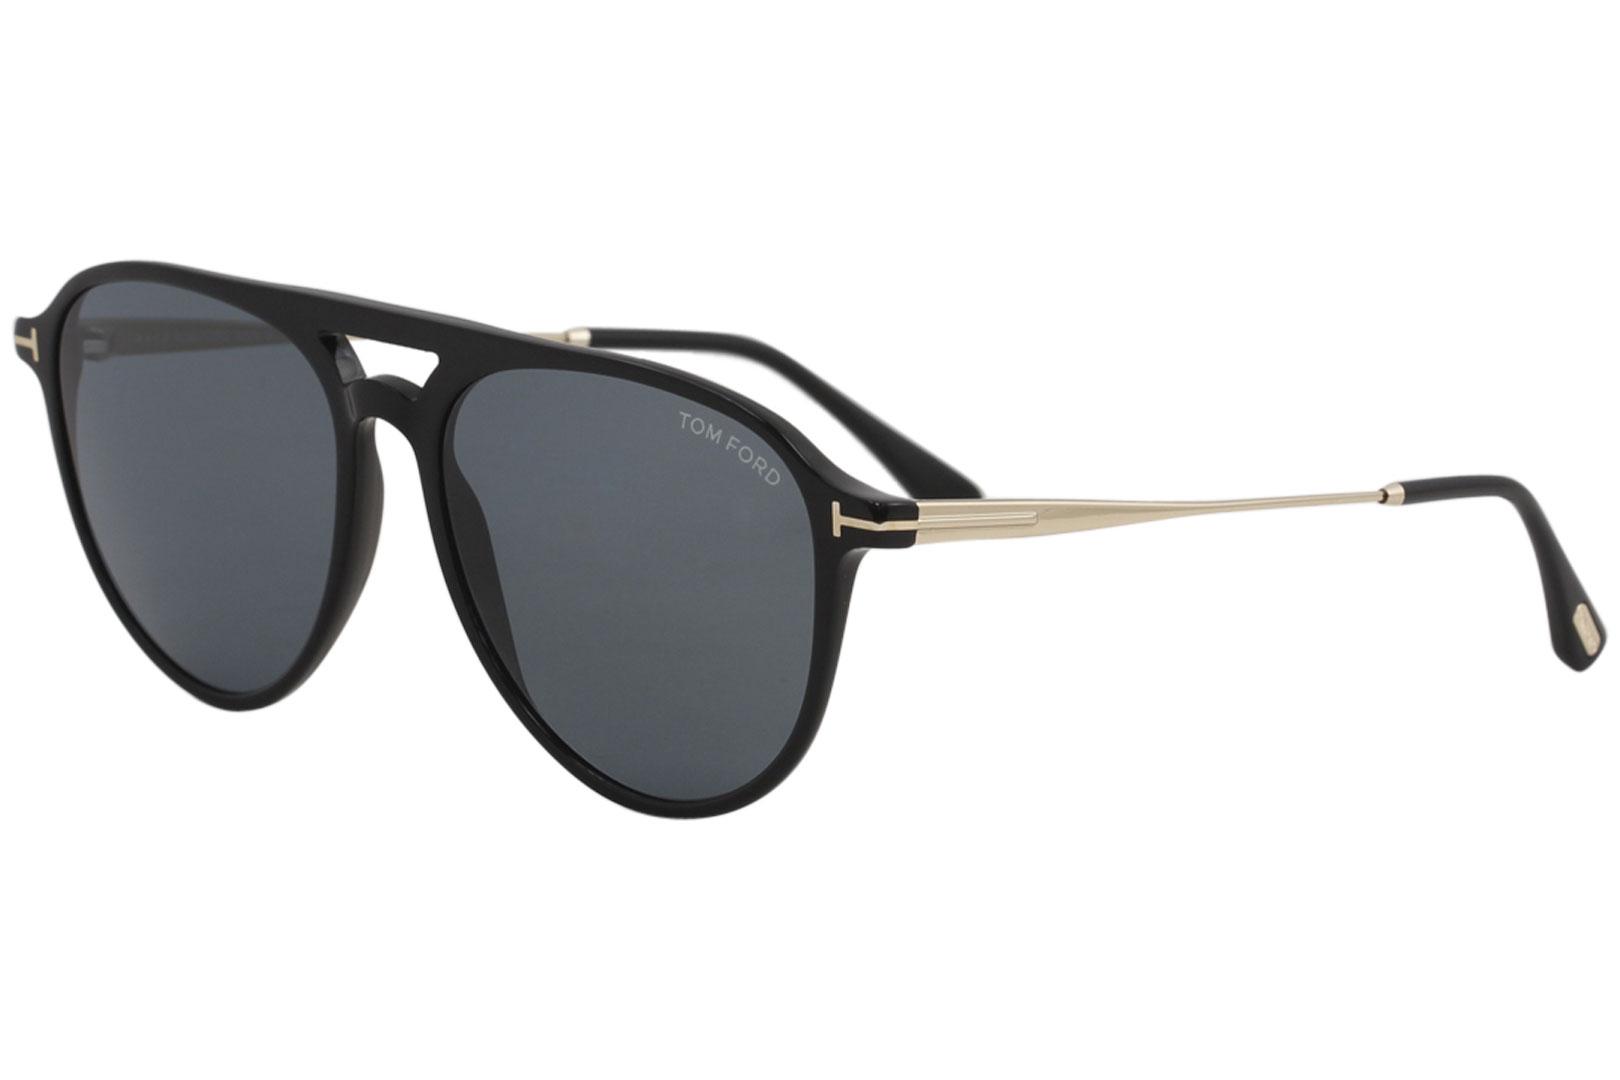 Tom TF587 01V Black Fashion Pilot Sunglasses 58mm | EyeSpecs.com